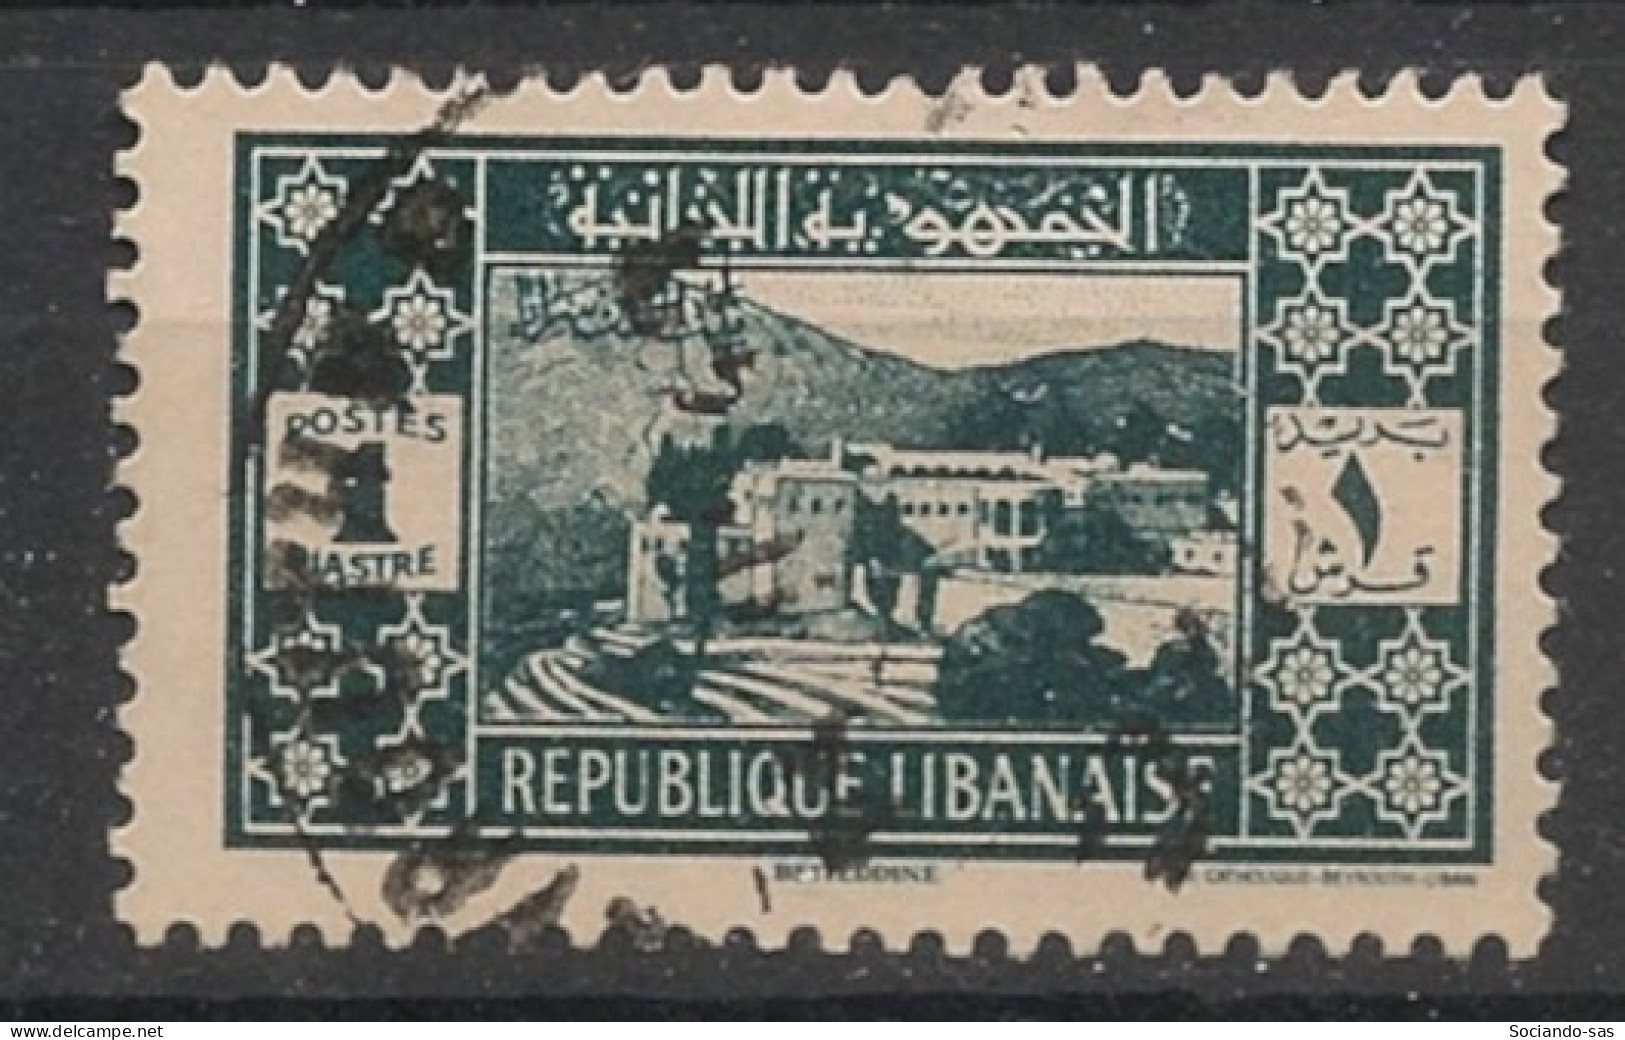 GRAND LIBAN - 1939 - N°YT. 164 - Beiteddine 1pi Ardoise - Oblitéré / Used - Used Stamps